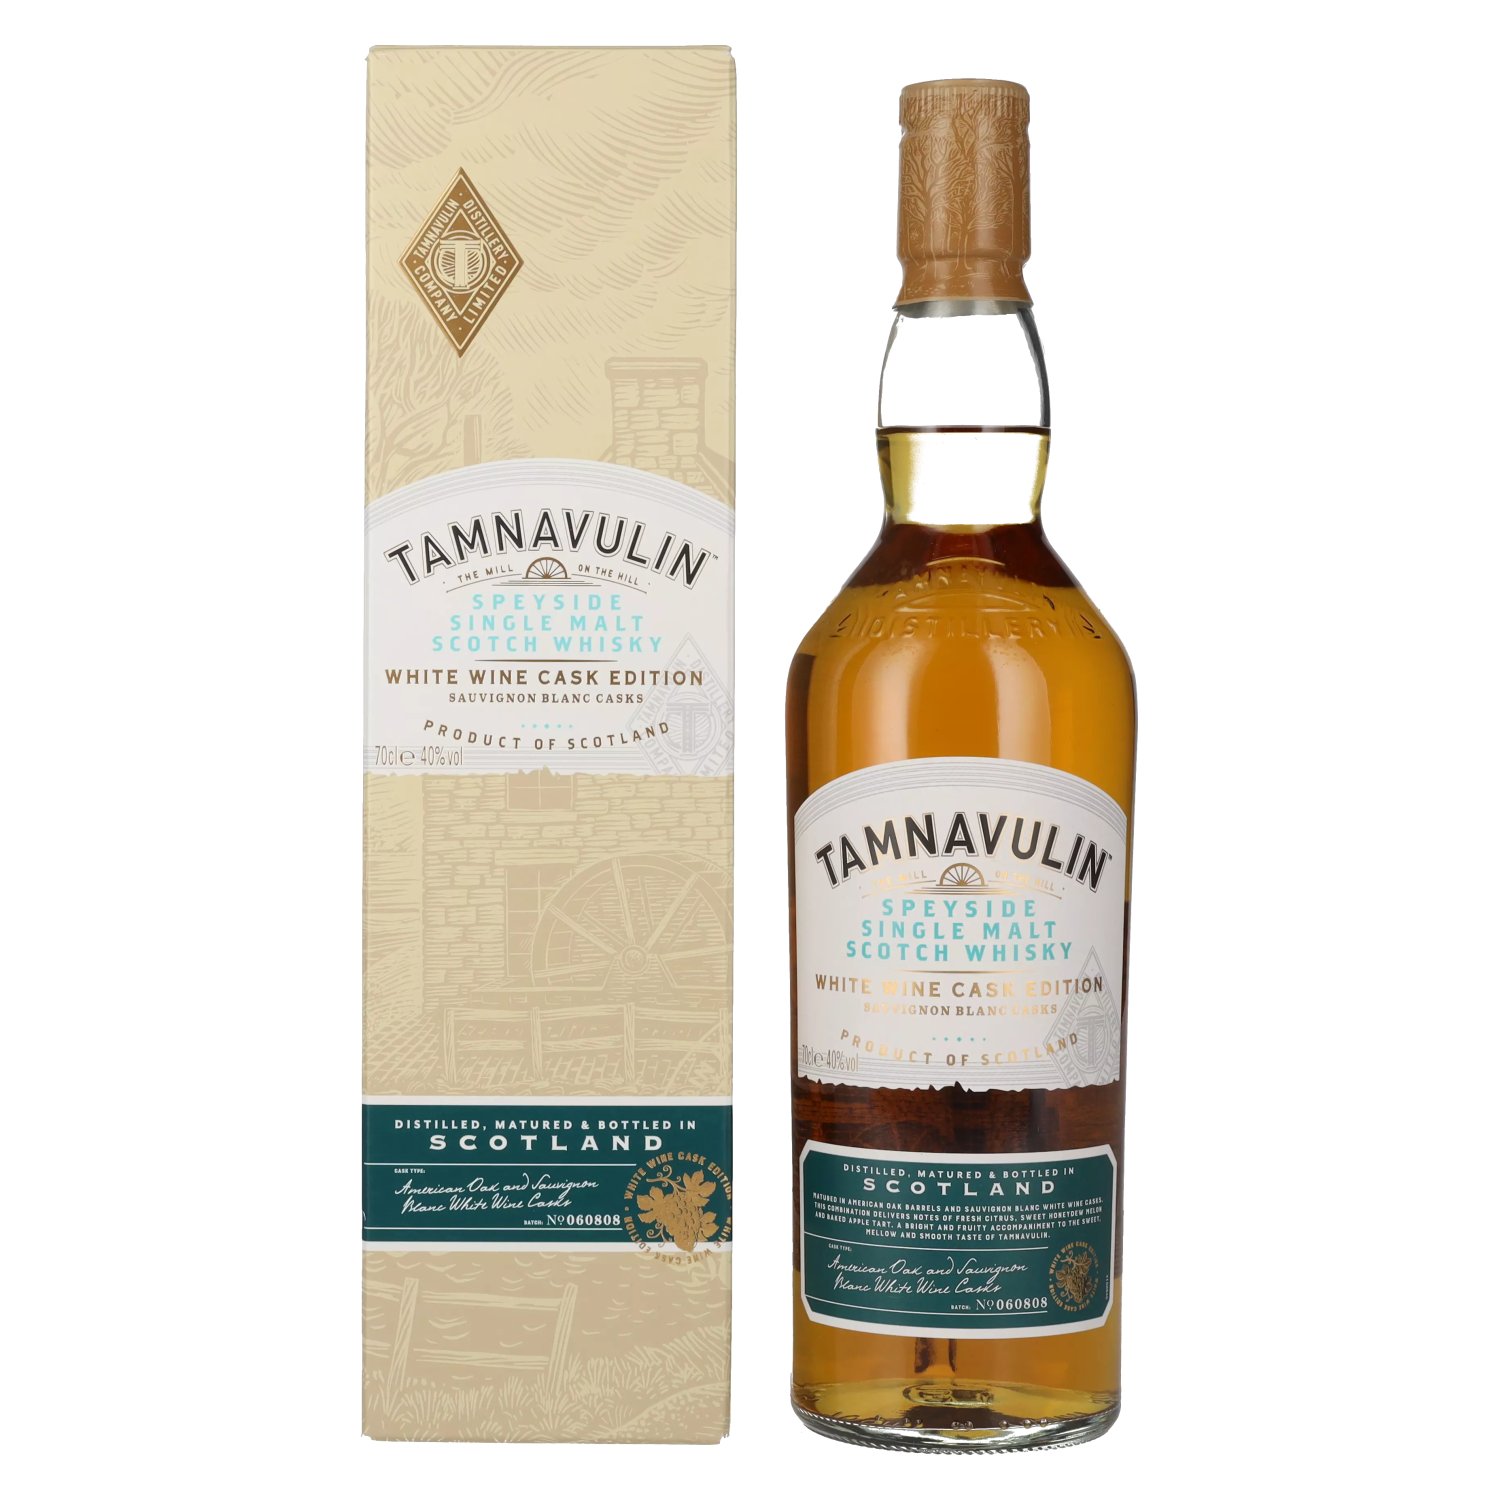 Tamnavulin White Wine Cask Speyside Single Malt Scotch Whisky 40 Vol 07l In Tbox